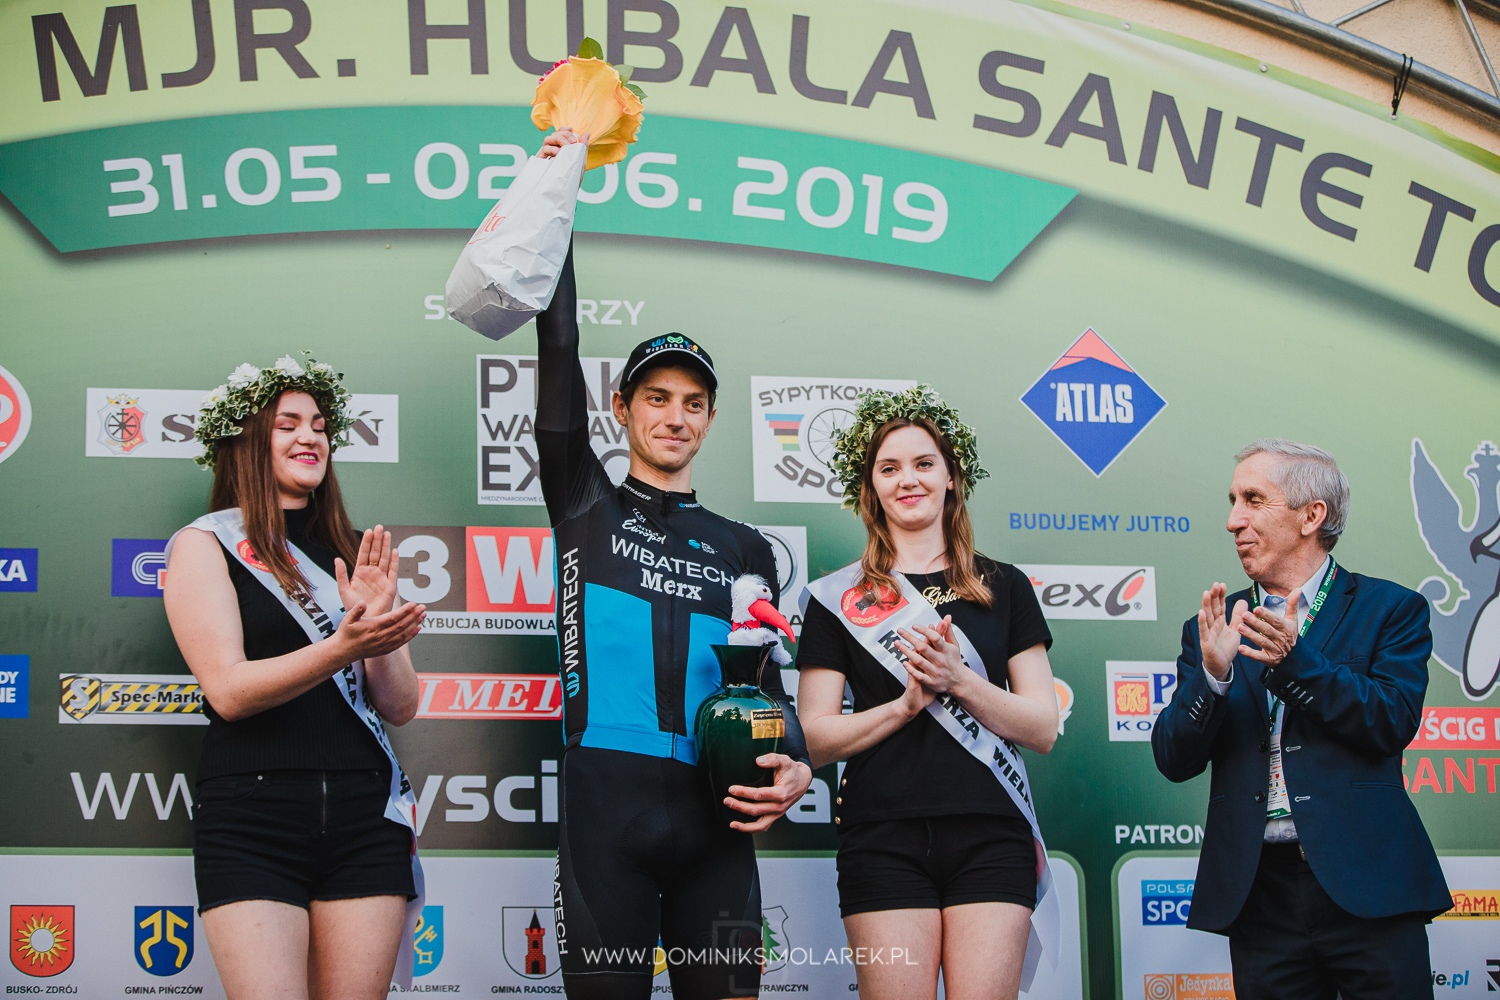 Wyścig mjr. Hubala – Sante Tour 2019: etap 3. Maciej Paterski hegemonem